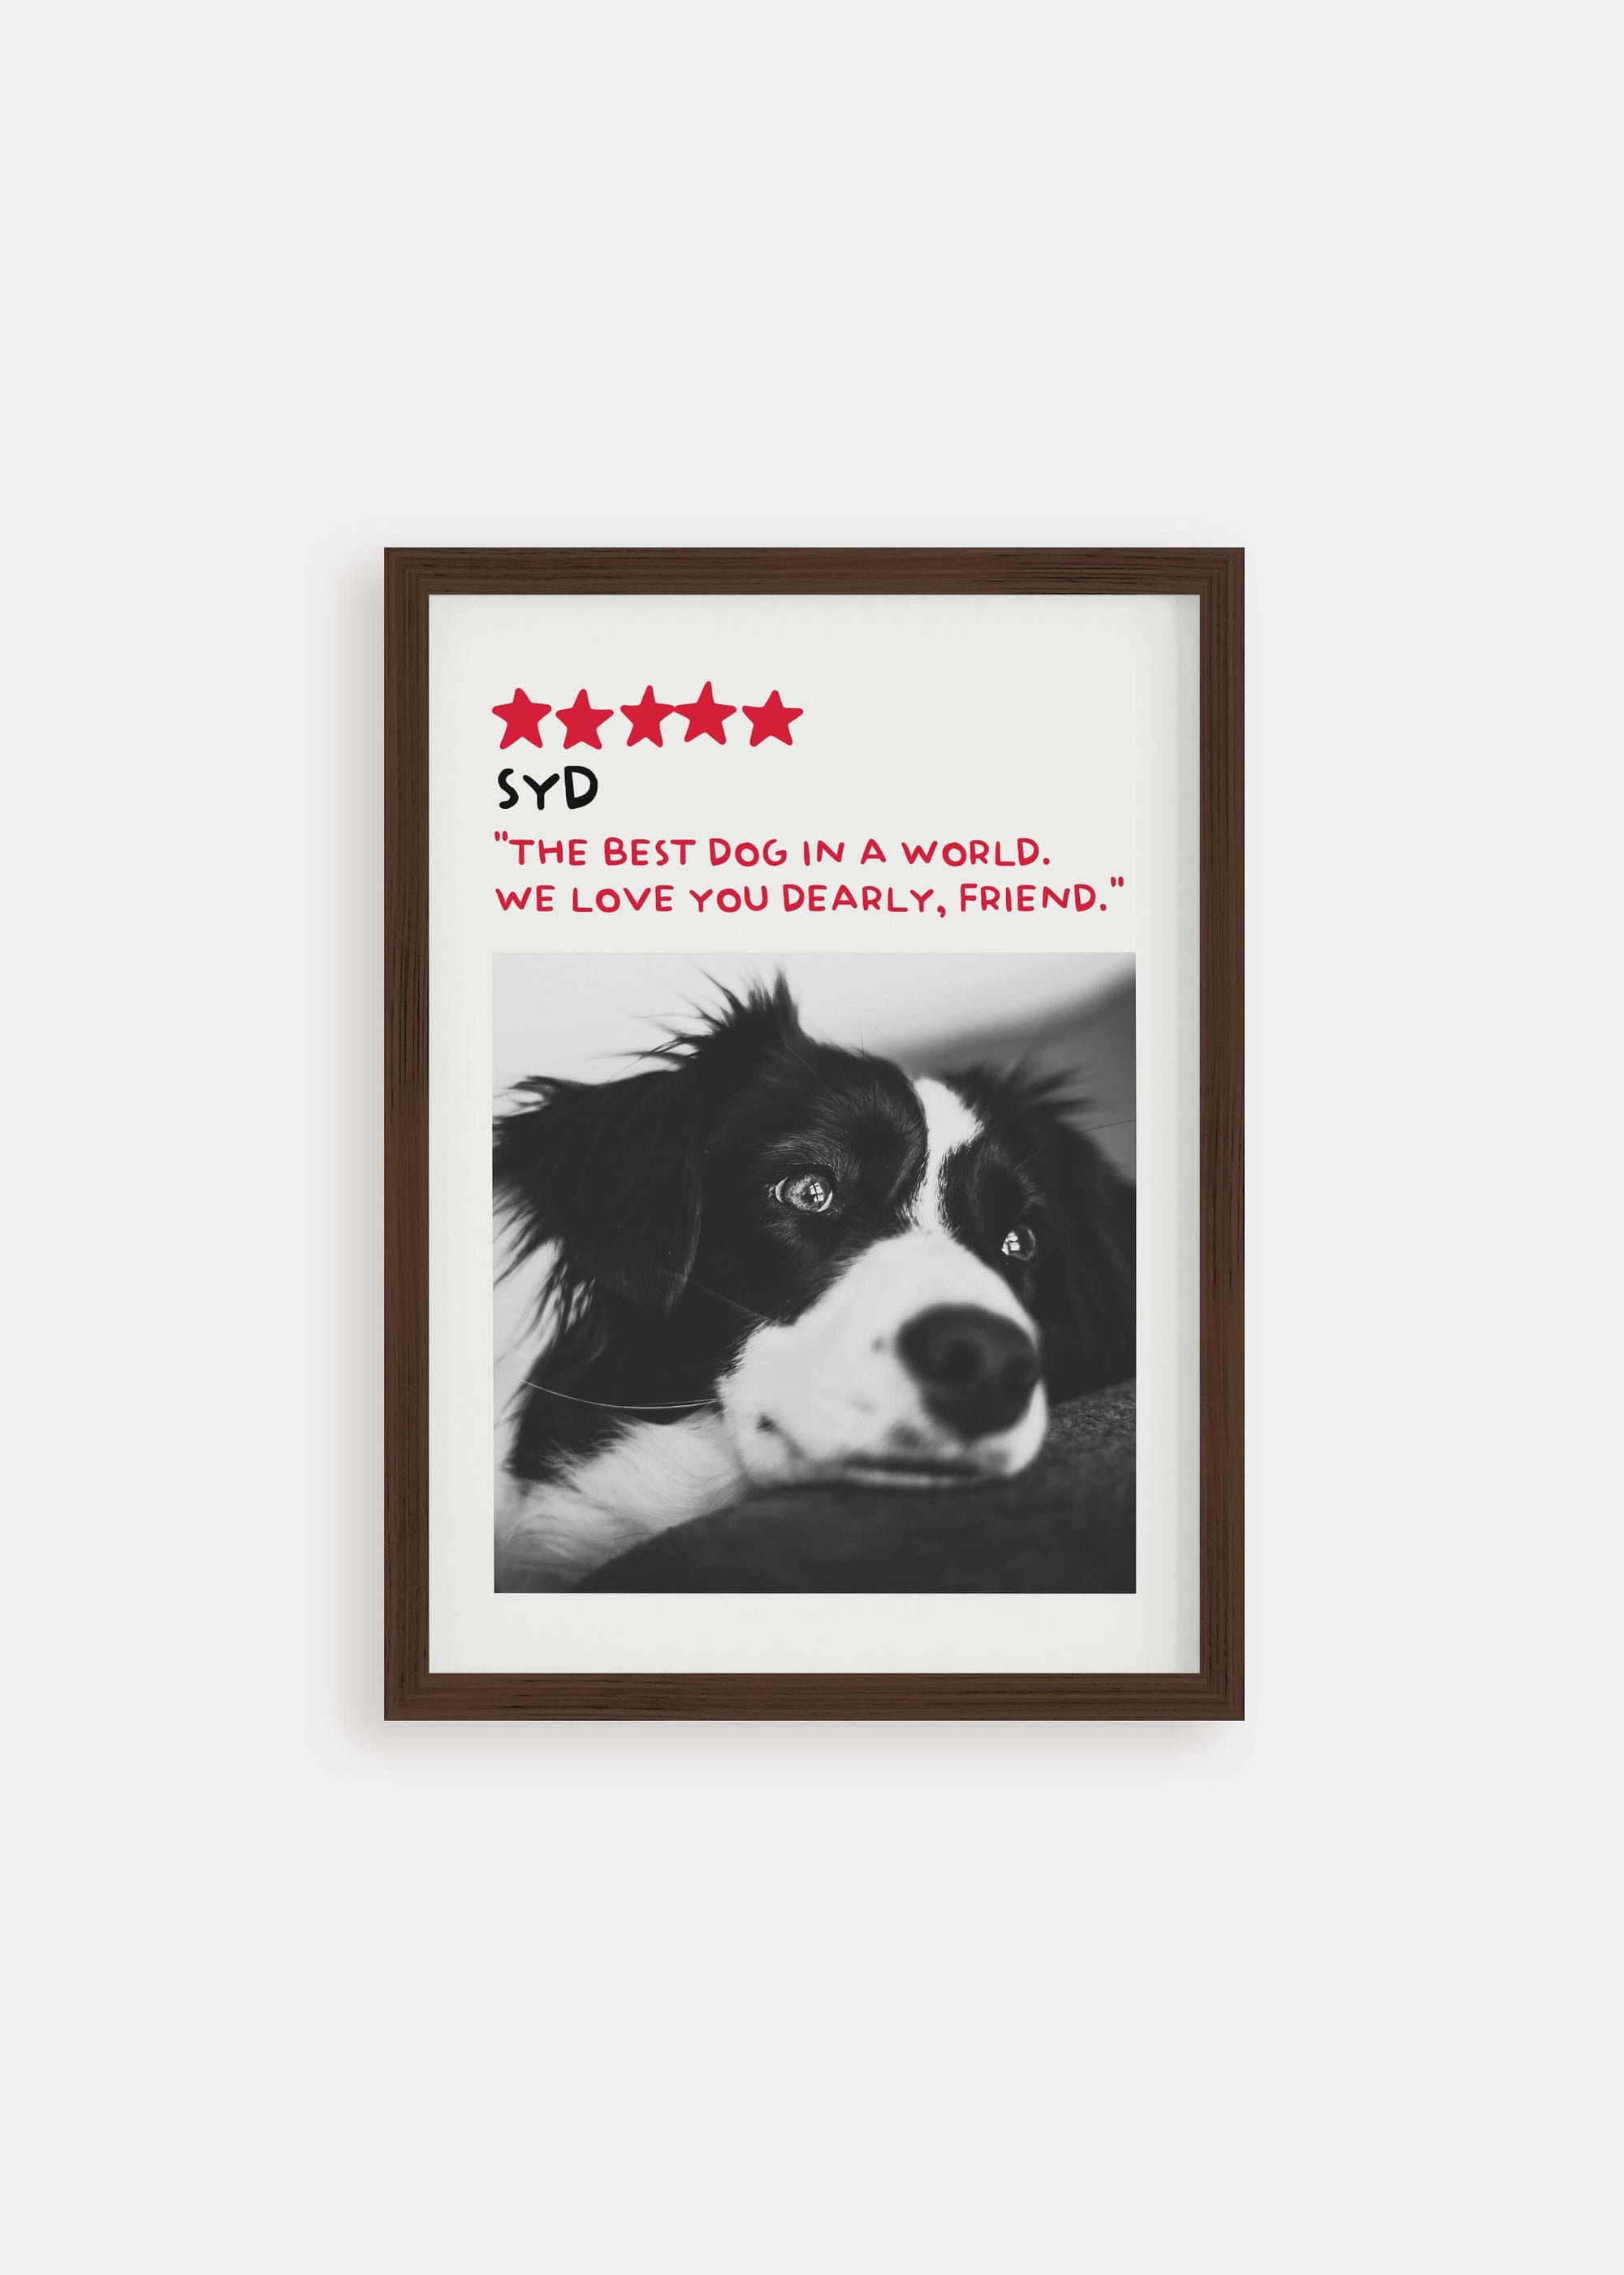 Dog memorial pet art poster in walnut frame.